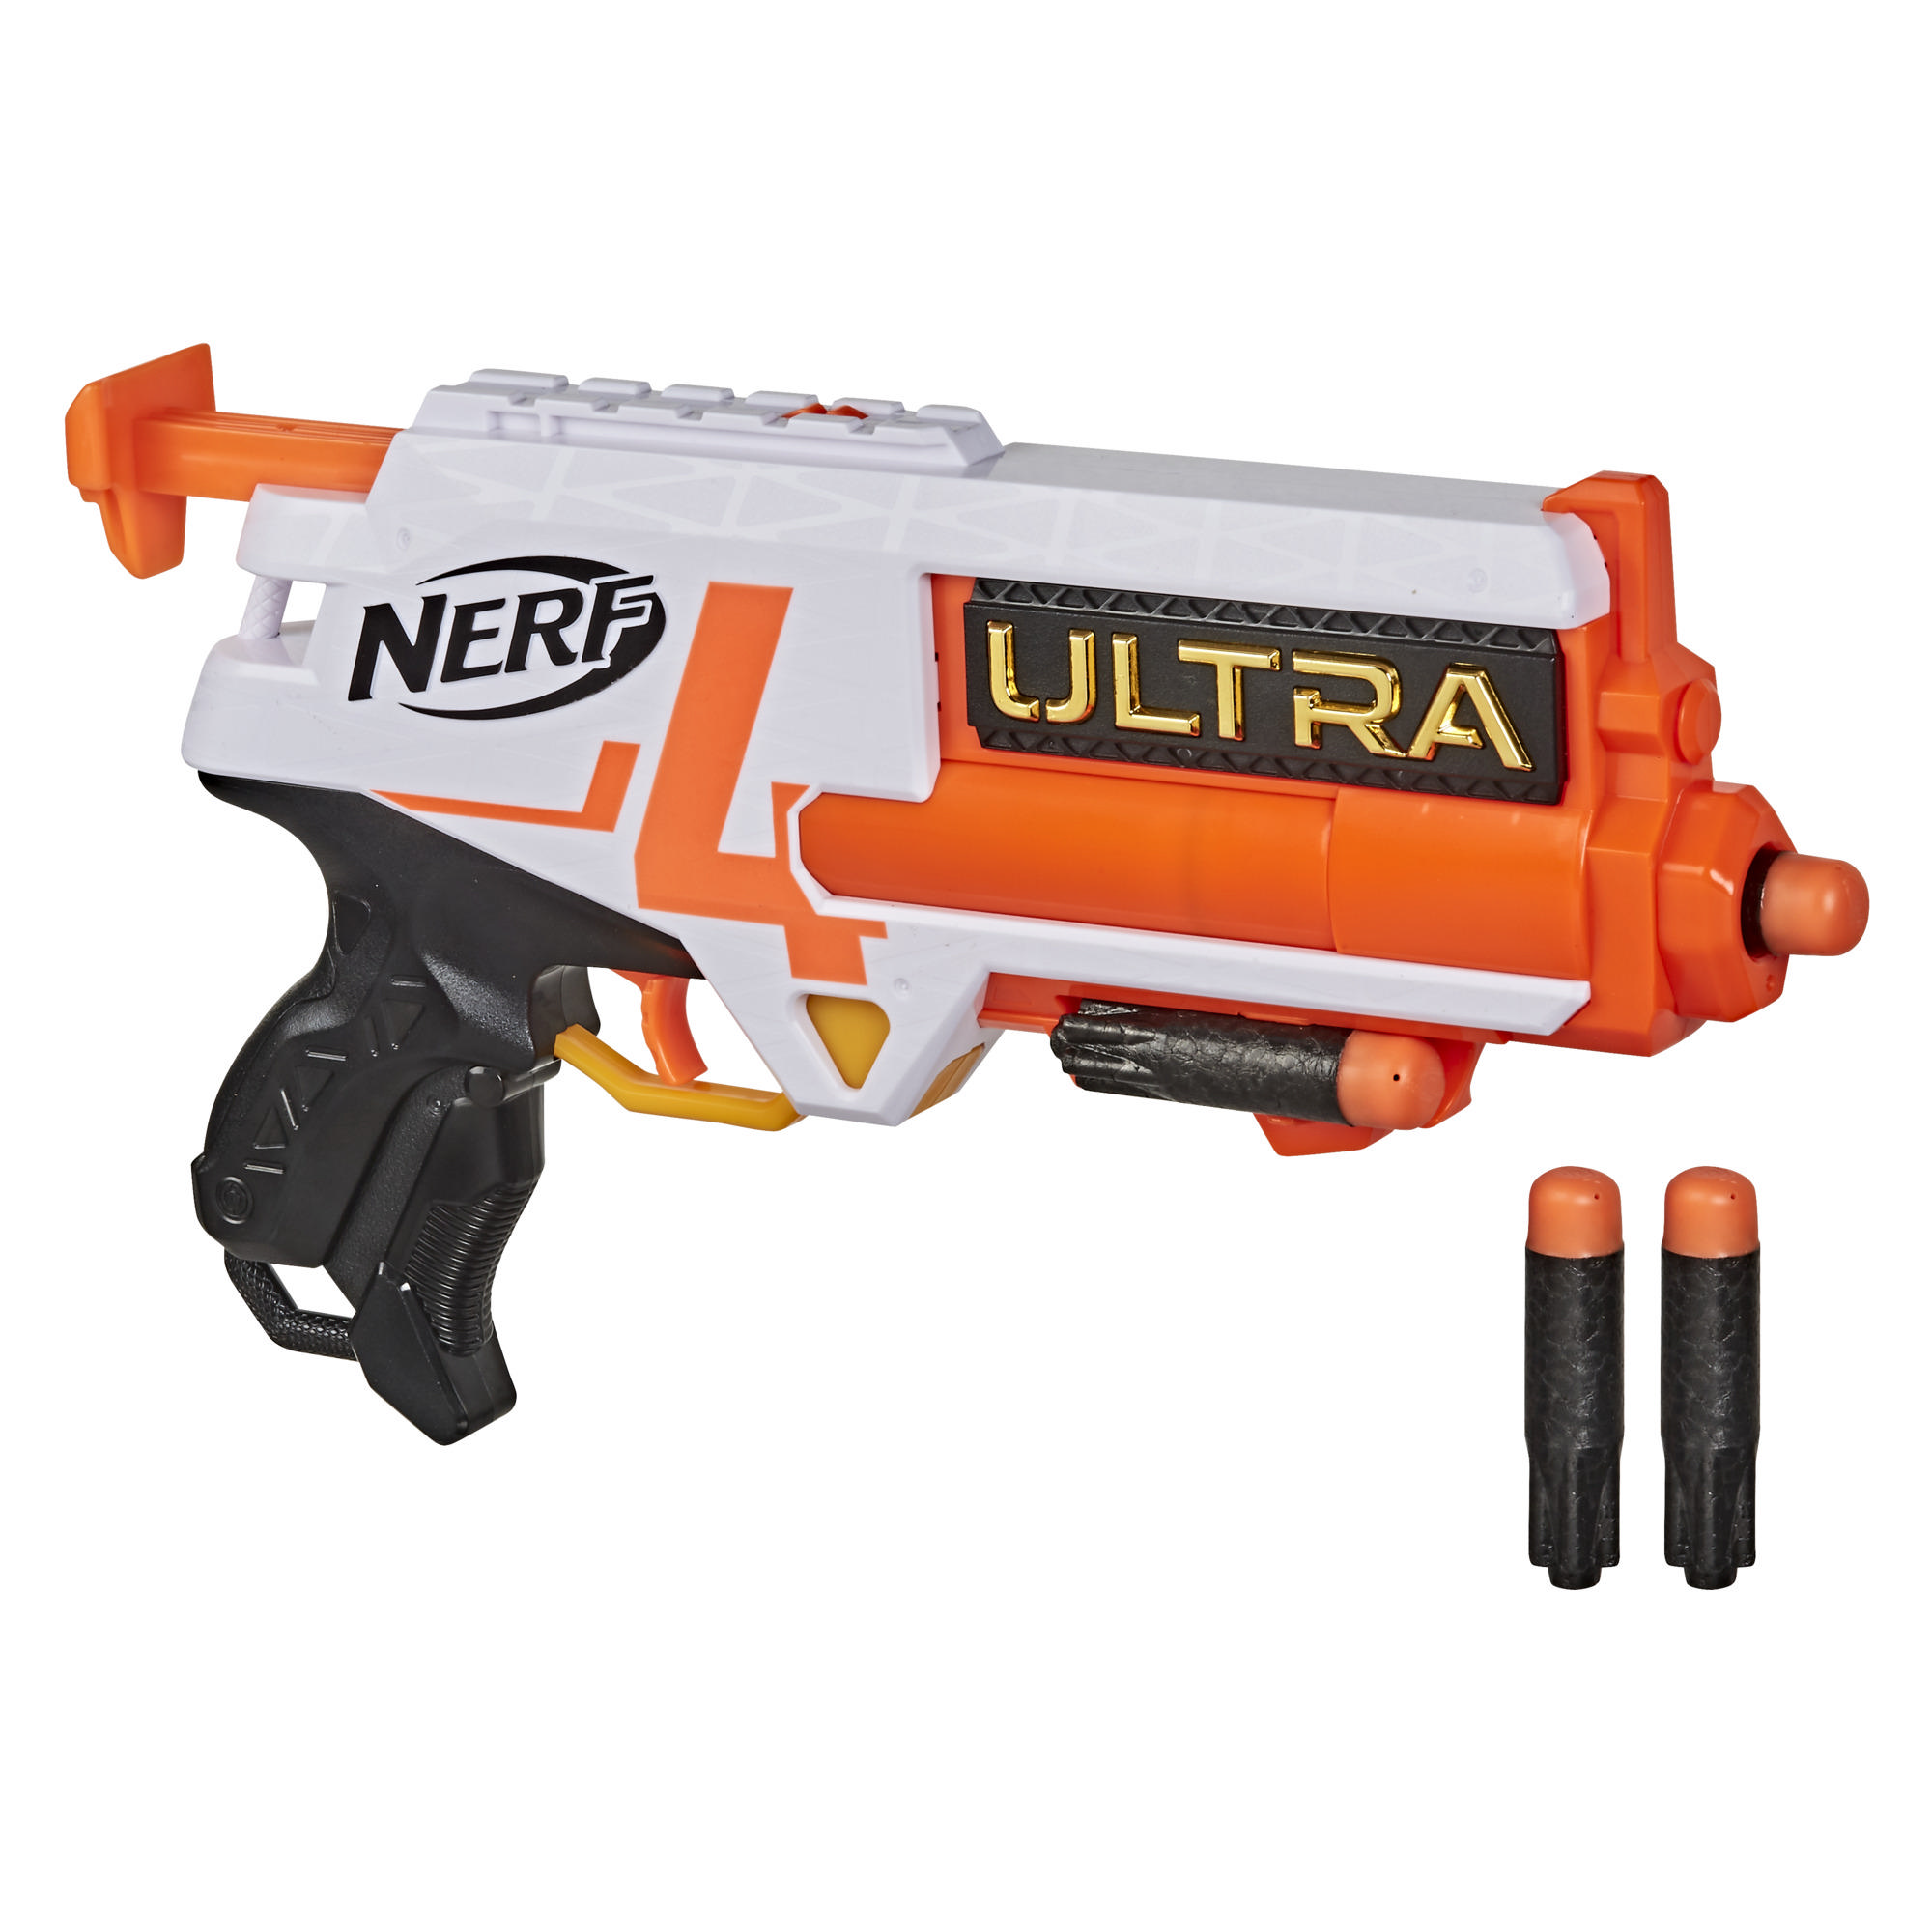 Lanzador Nerf Ultra Four - 4 dardos Nerf Ultra - Lanzamiento único - Compatible solo con dardos Nerf Ultra